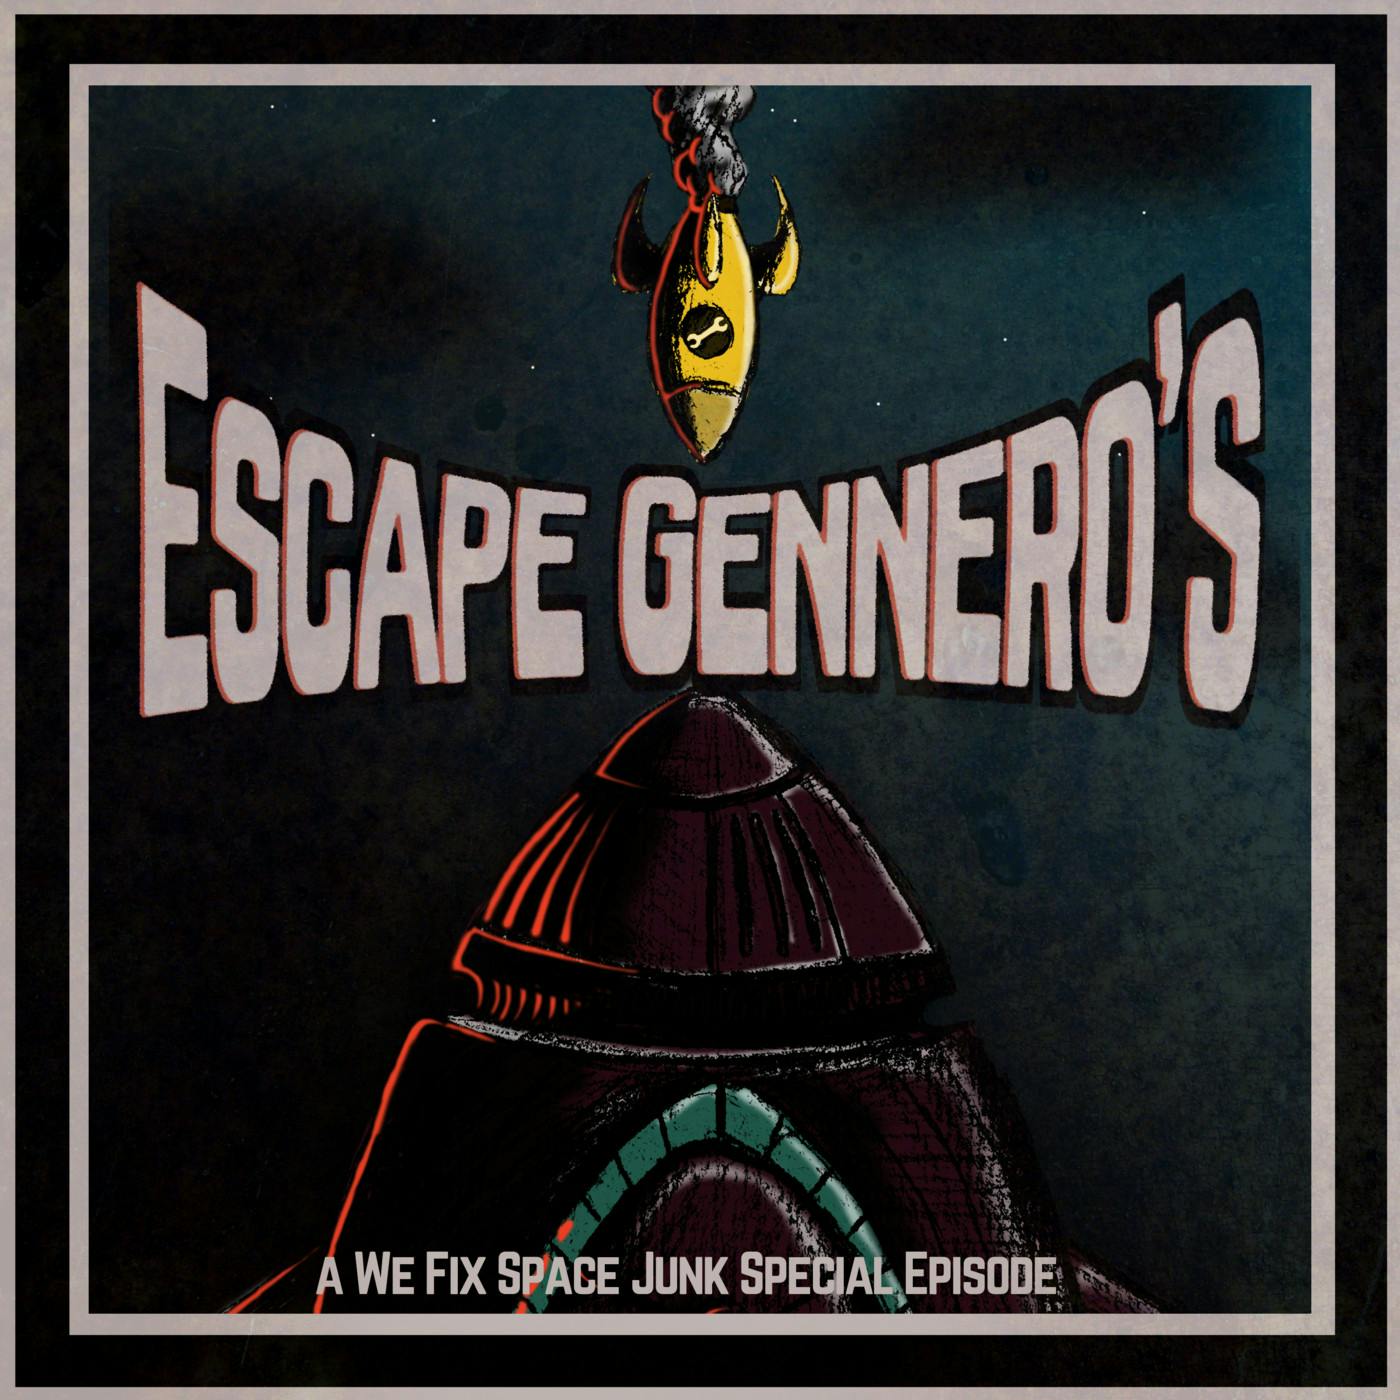 [Trailer:] Escape Gennero's, a We Fix Space Junk Special